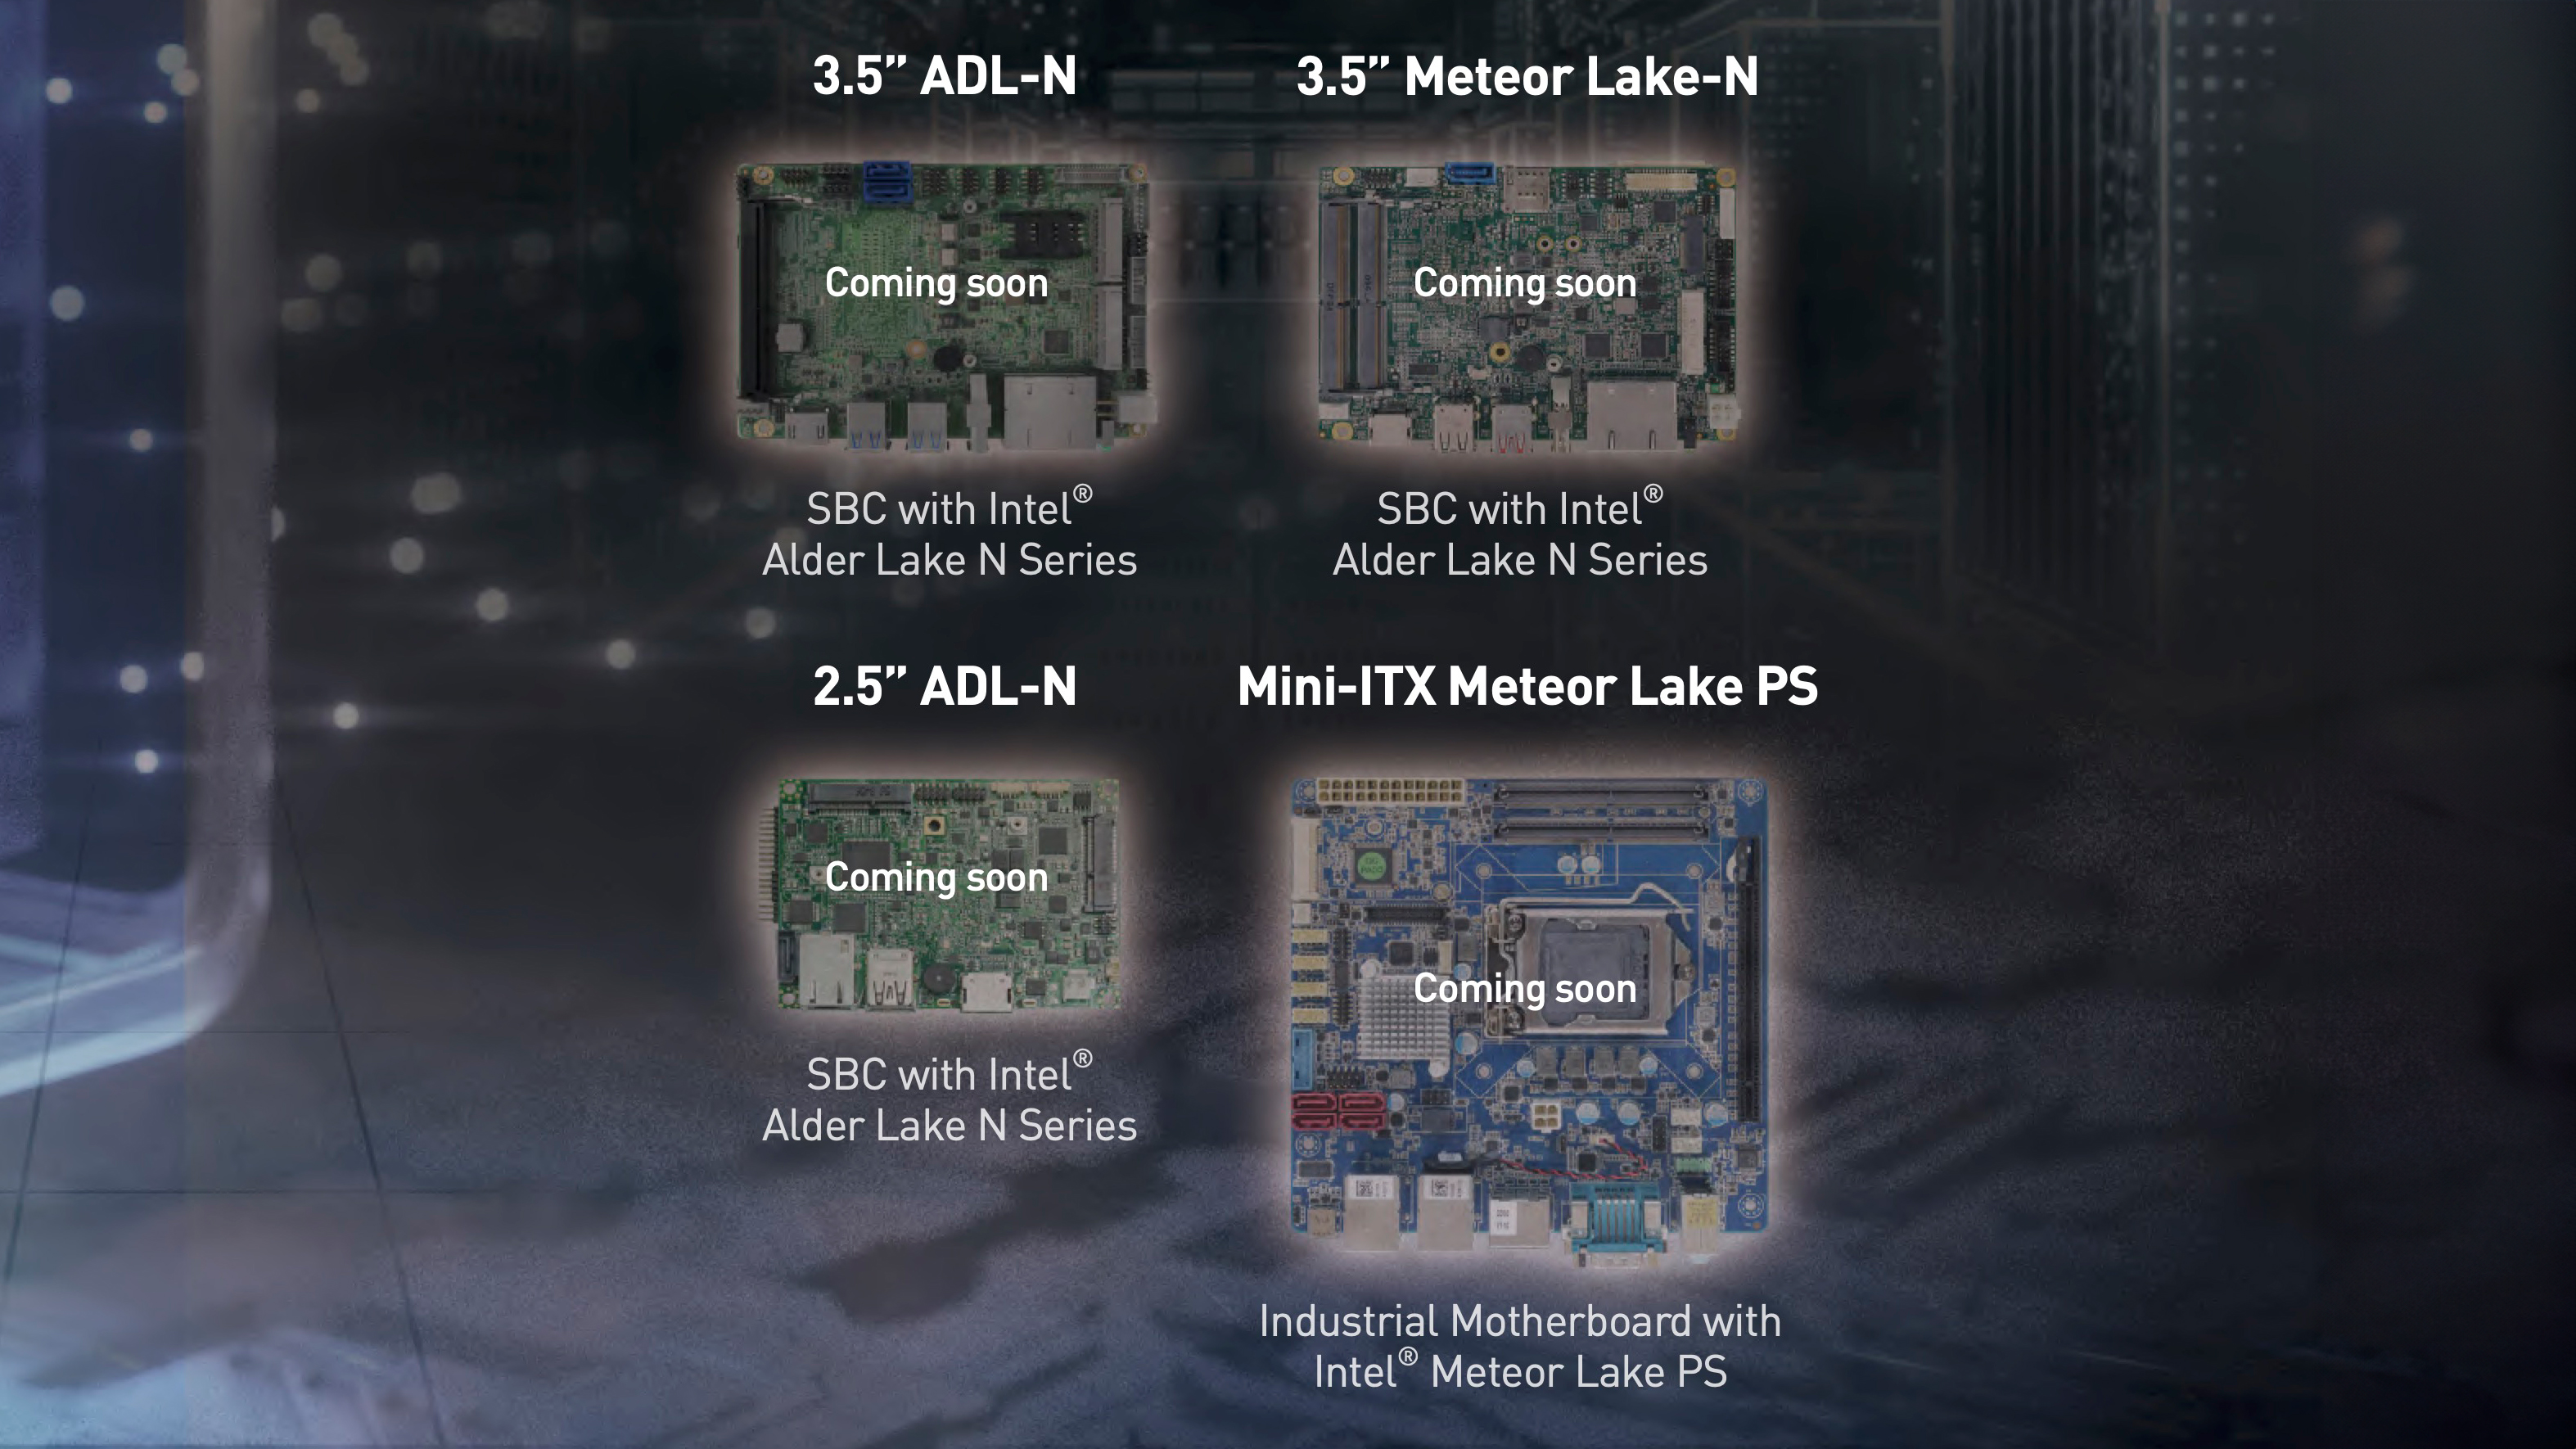 Mini-ITX Meteor Lake PS